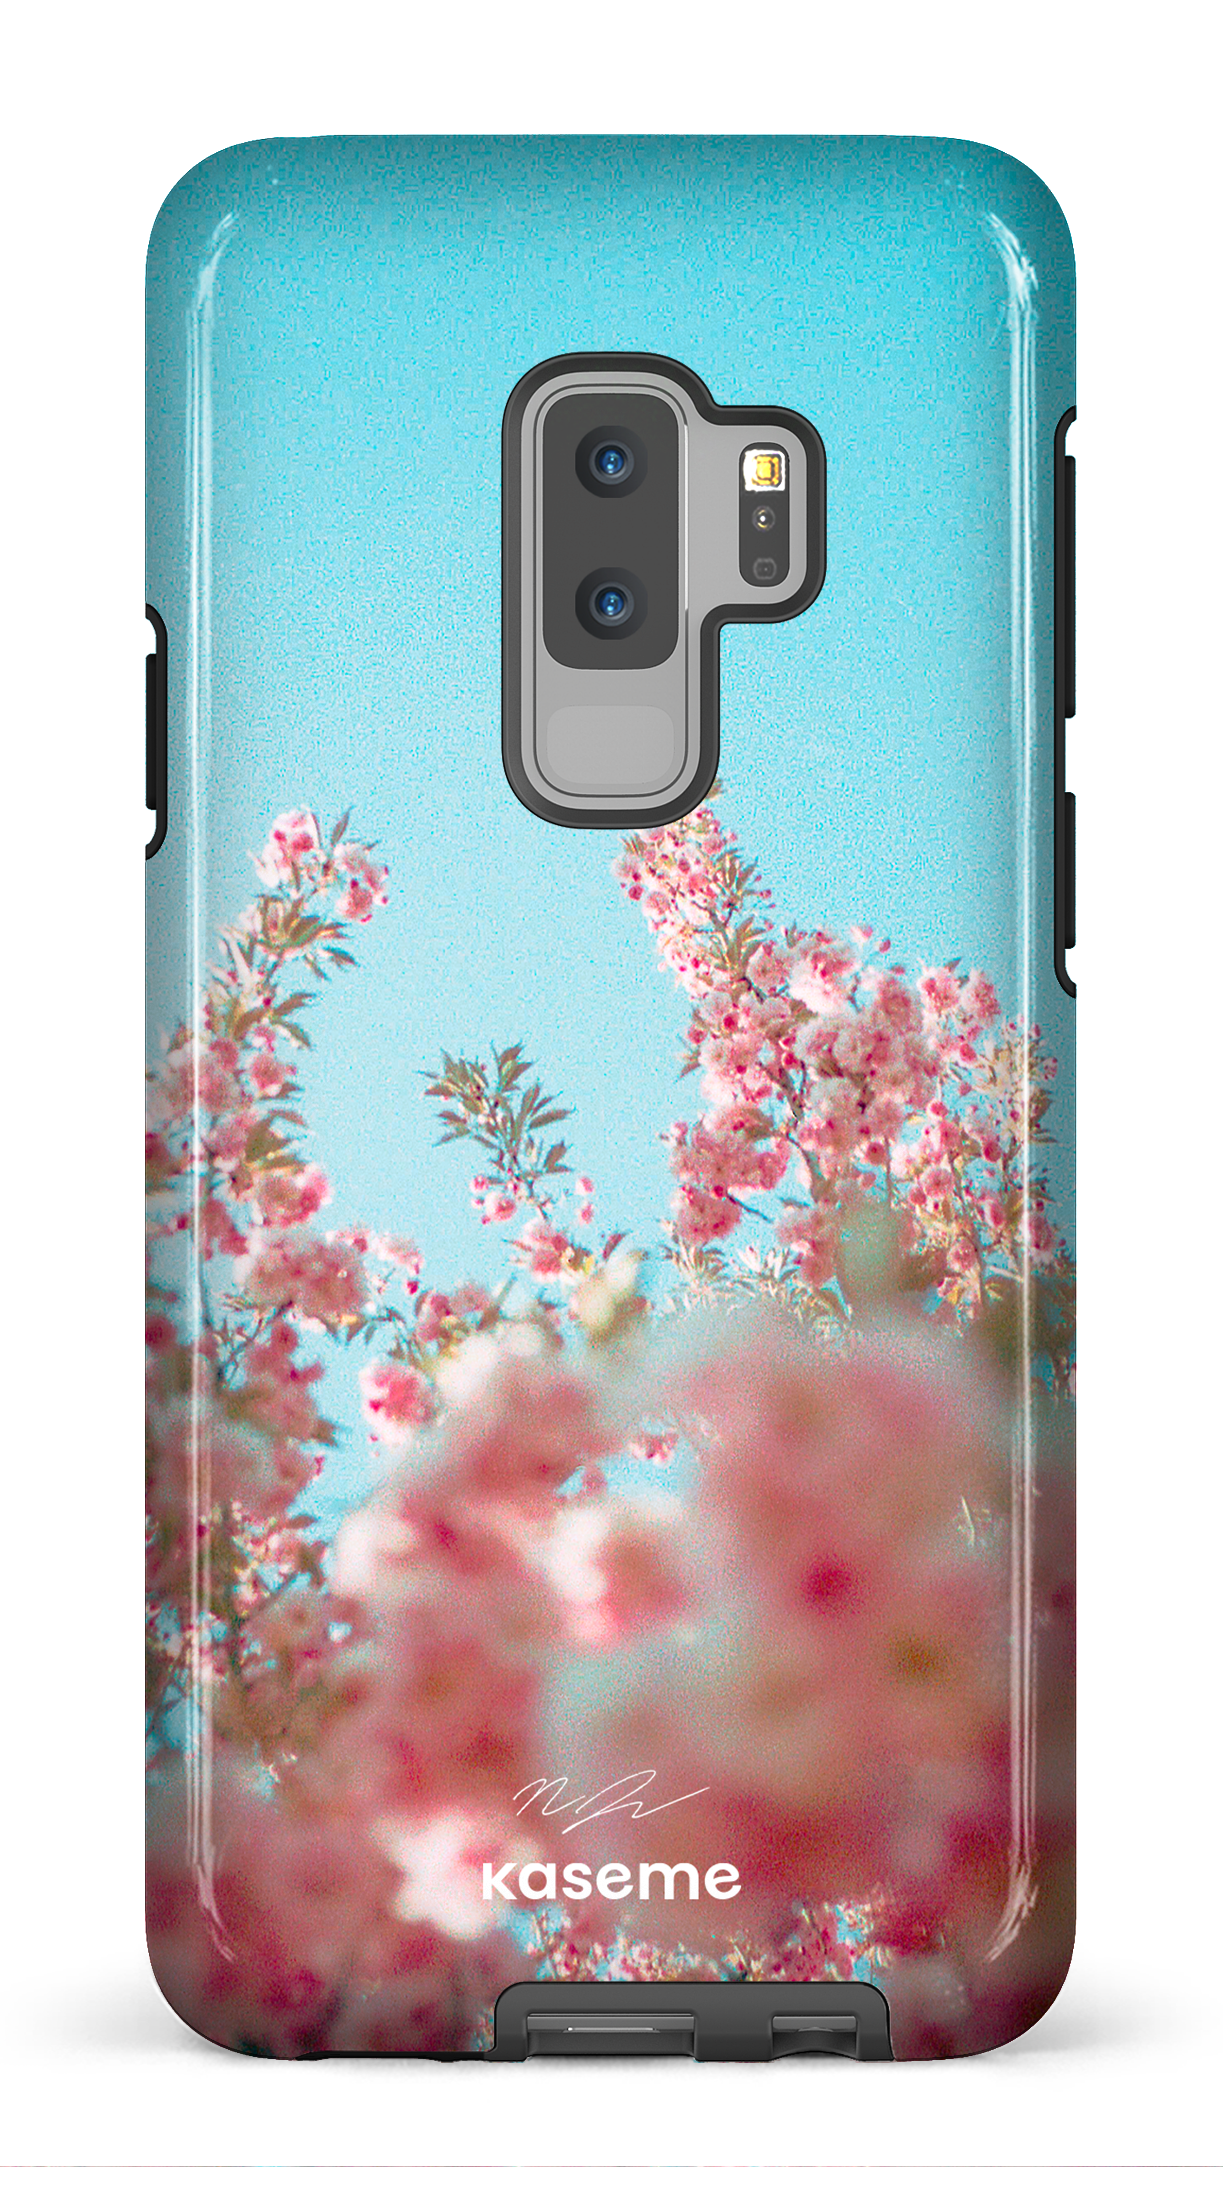 Bloom by Nevin Johnson - Galaxy S9 Plus